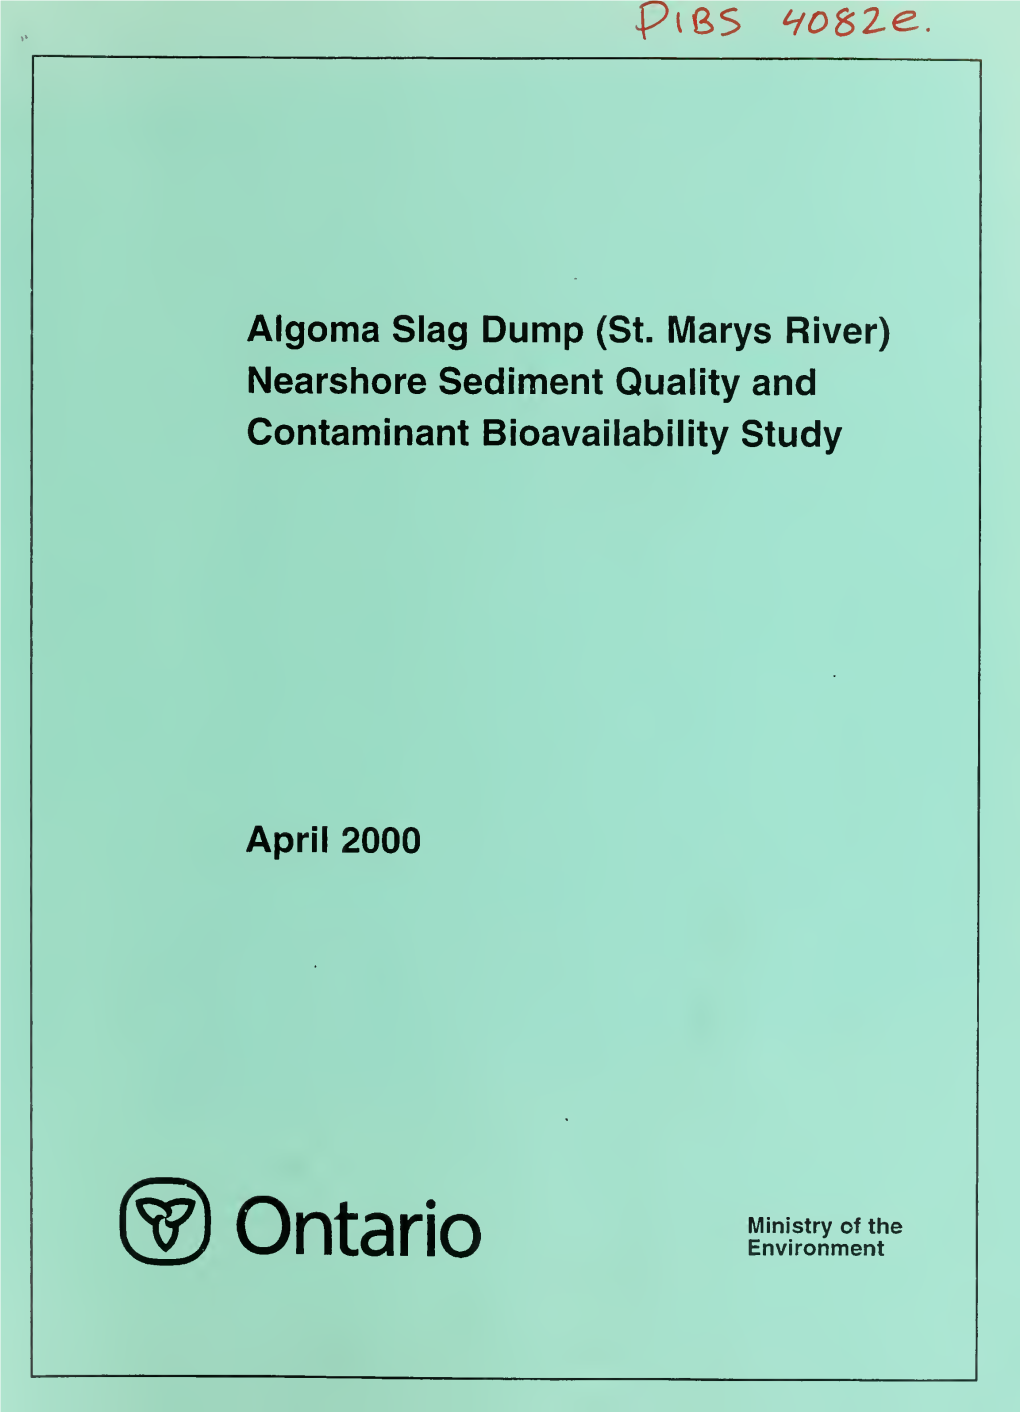 Algoma Slag Dump (St. Marys River) Nearshore Sediment Quality and Contaminant Bioavailability Study